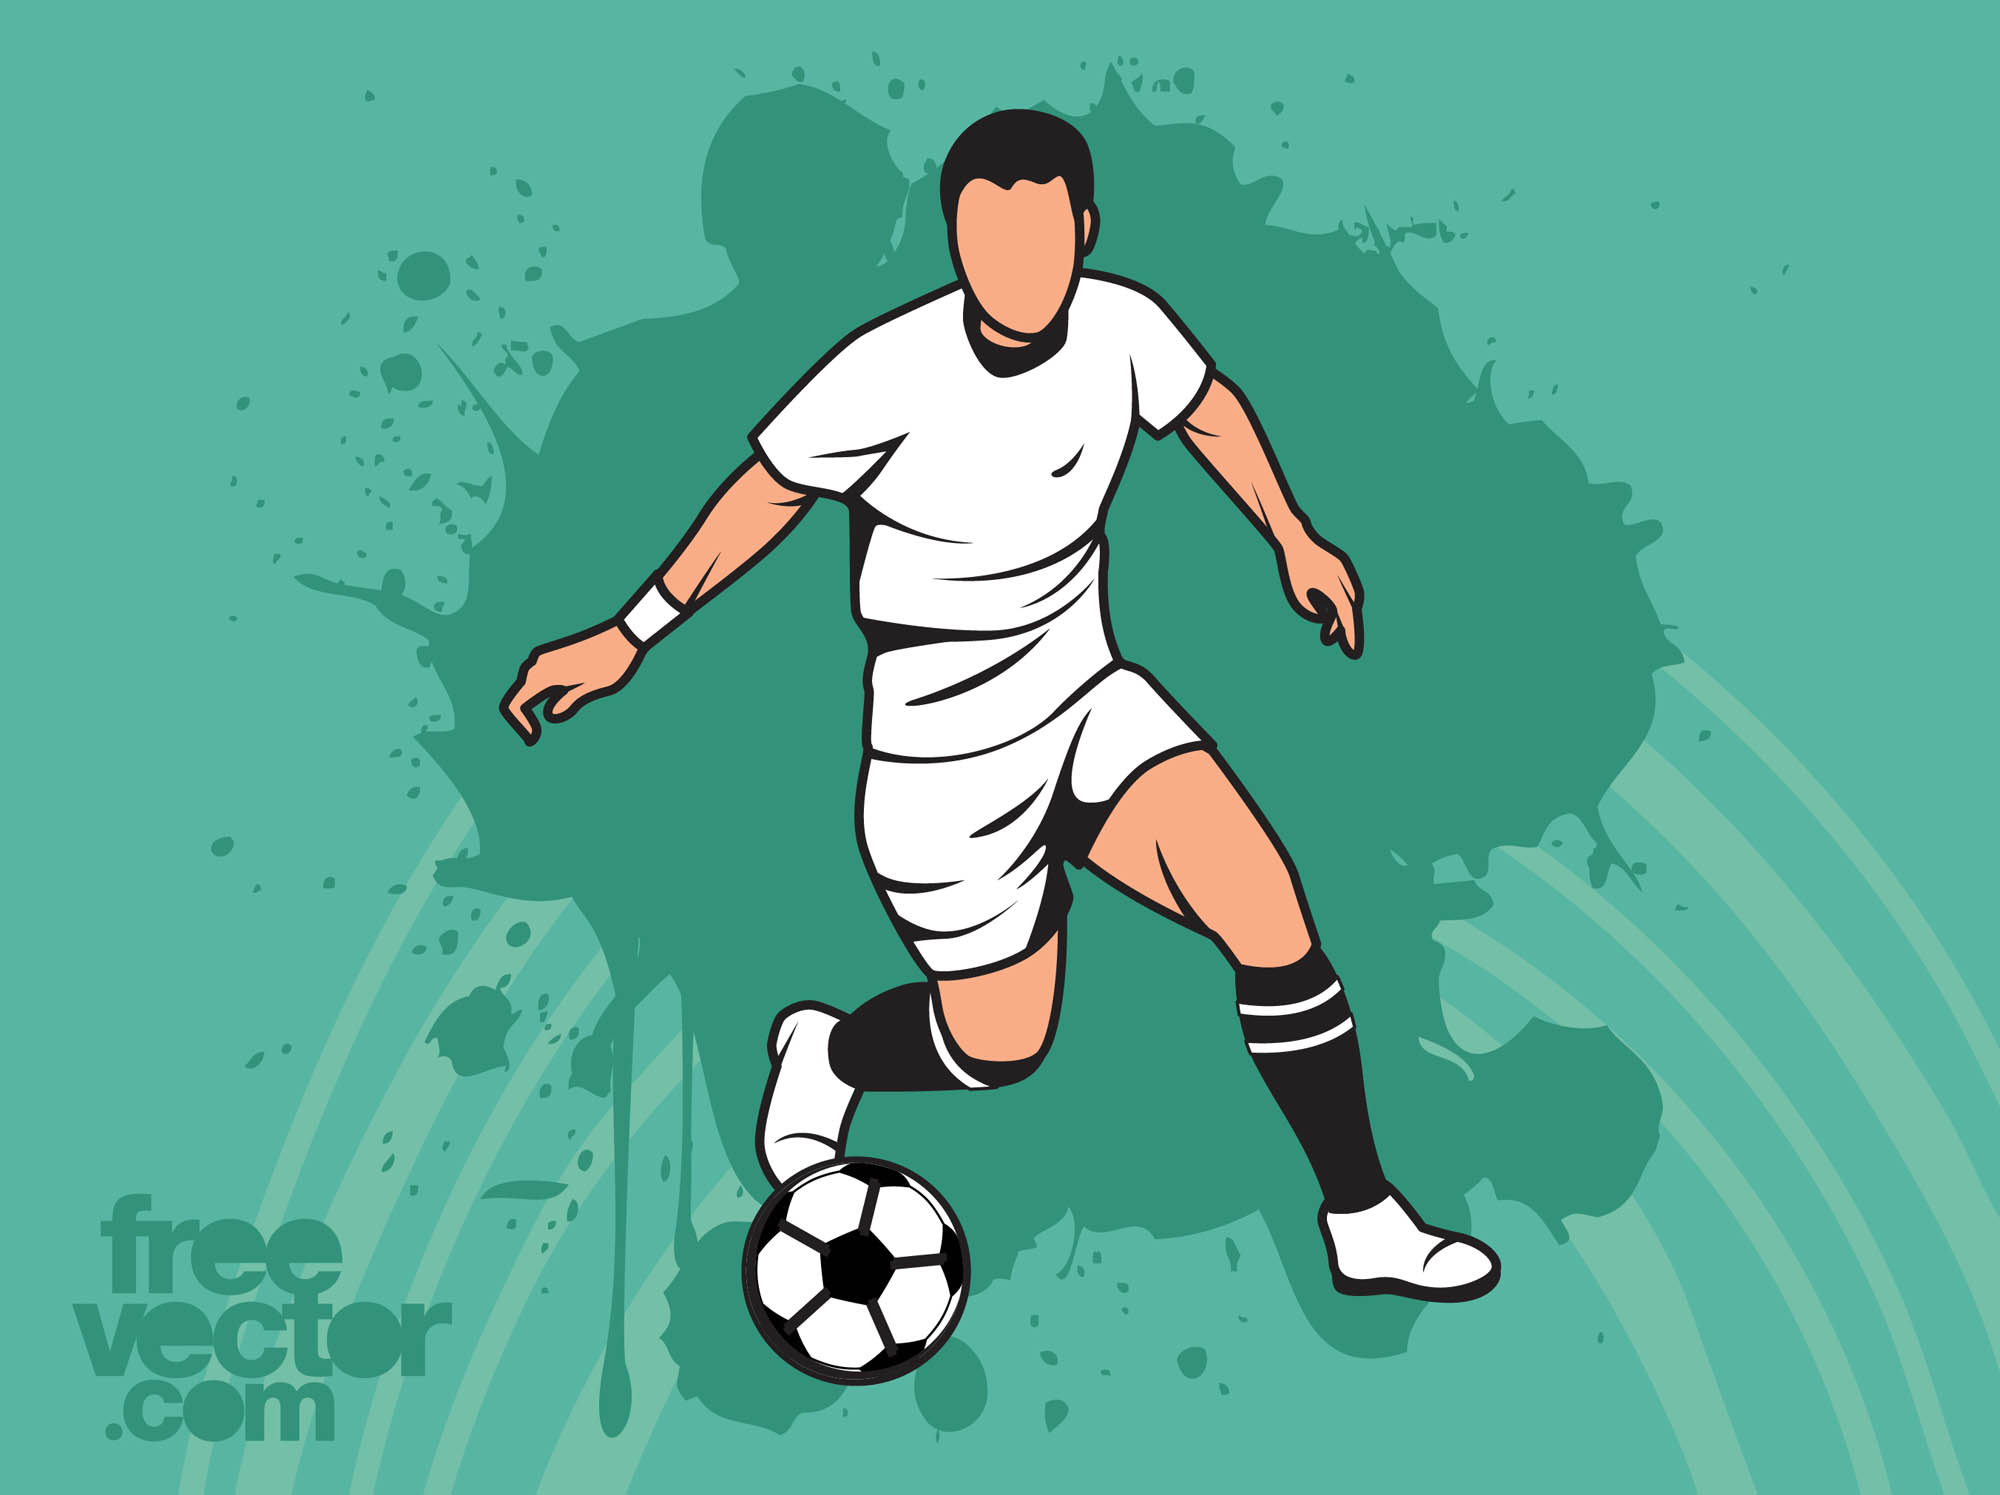 Football Action Vector Art & Graphics | freevector.com